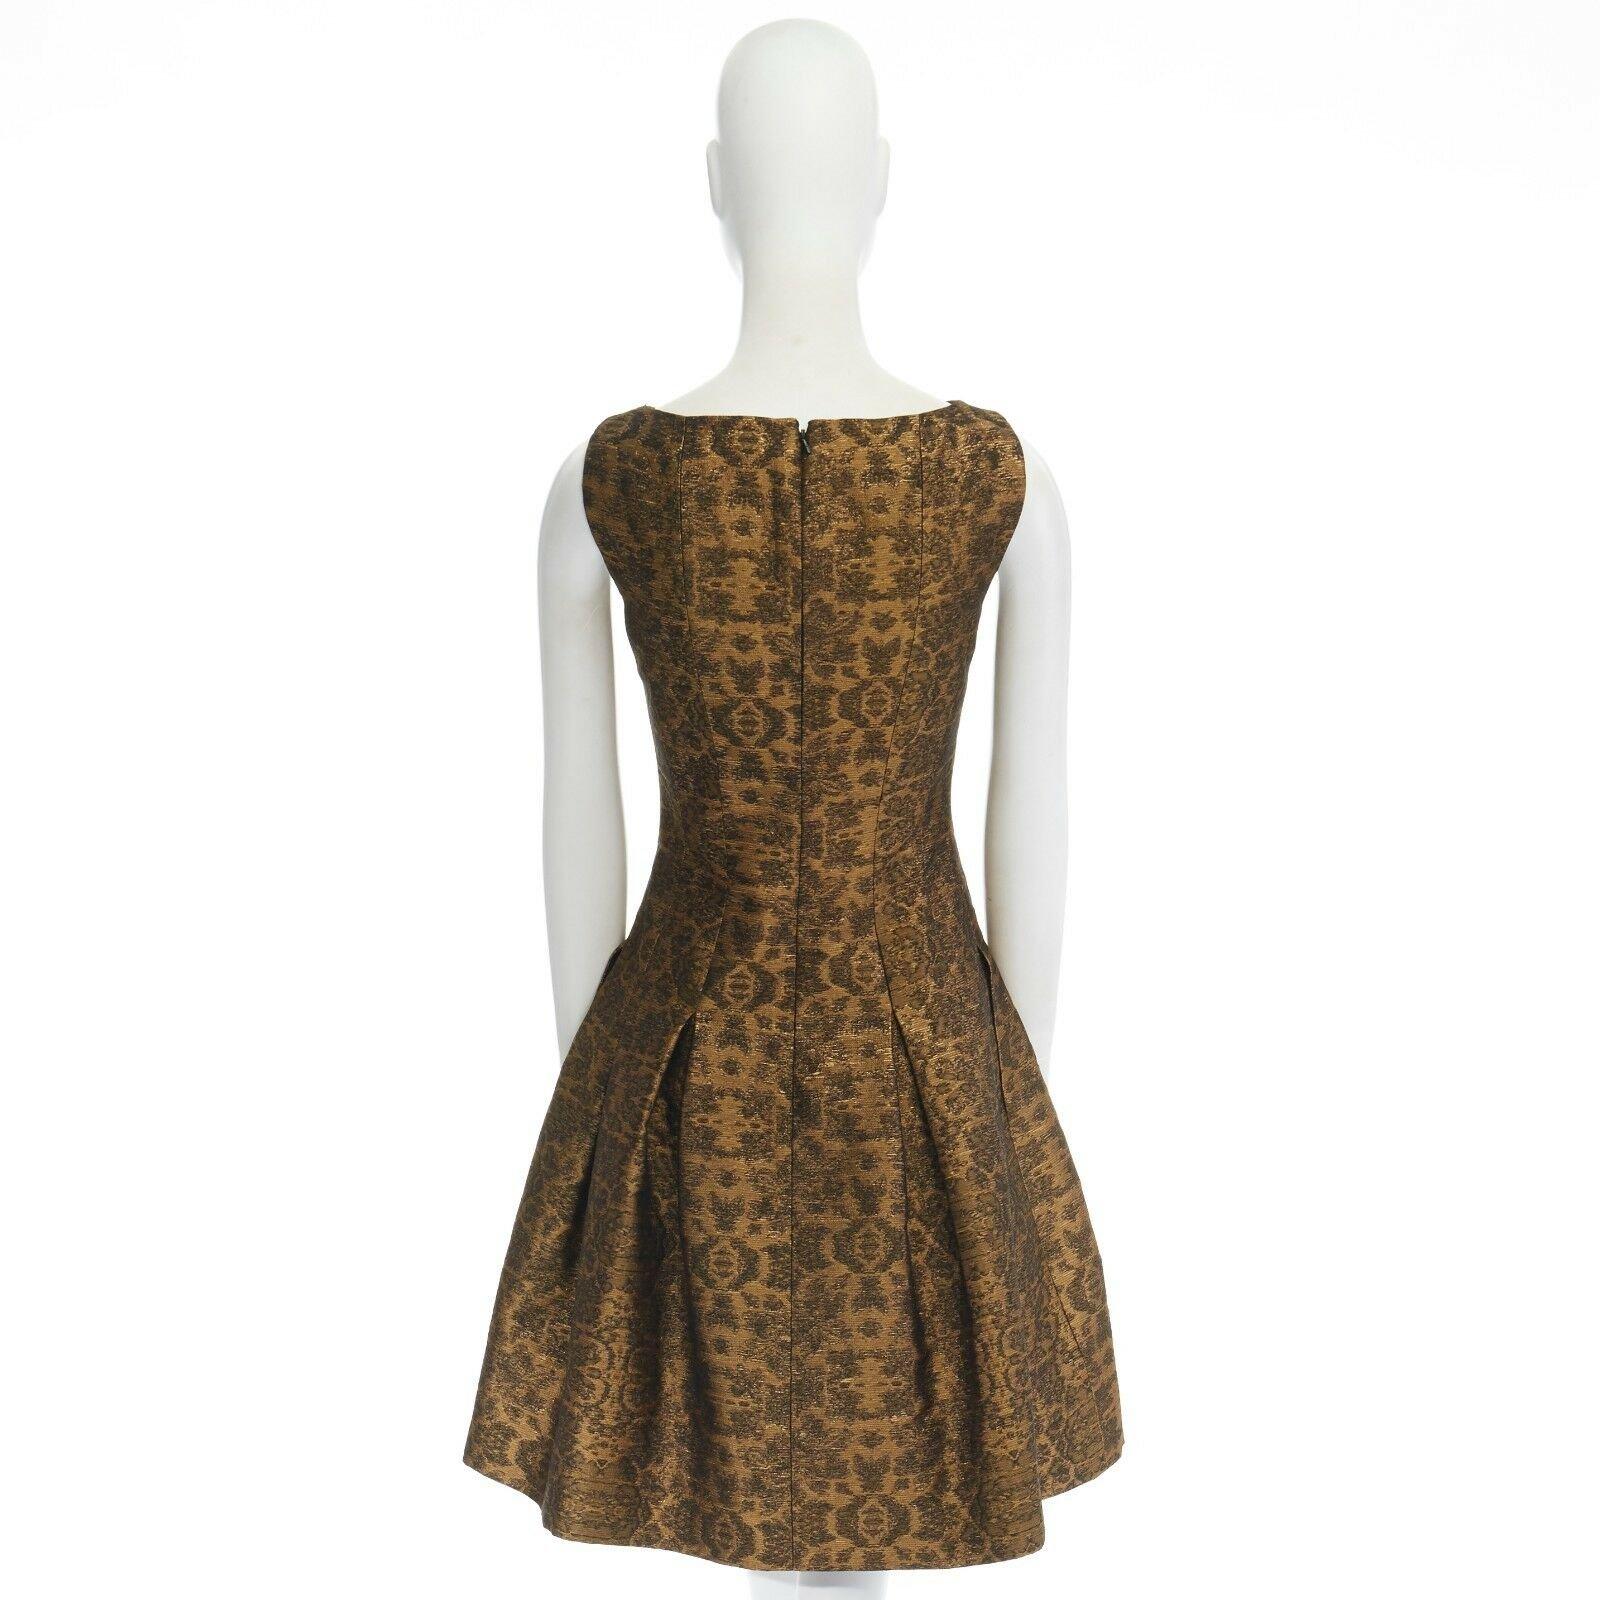 Brown OSCAR DE LA RENTA 2014 gold brocade fit flare skirt cocktail dress US0 XS